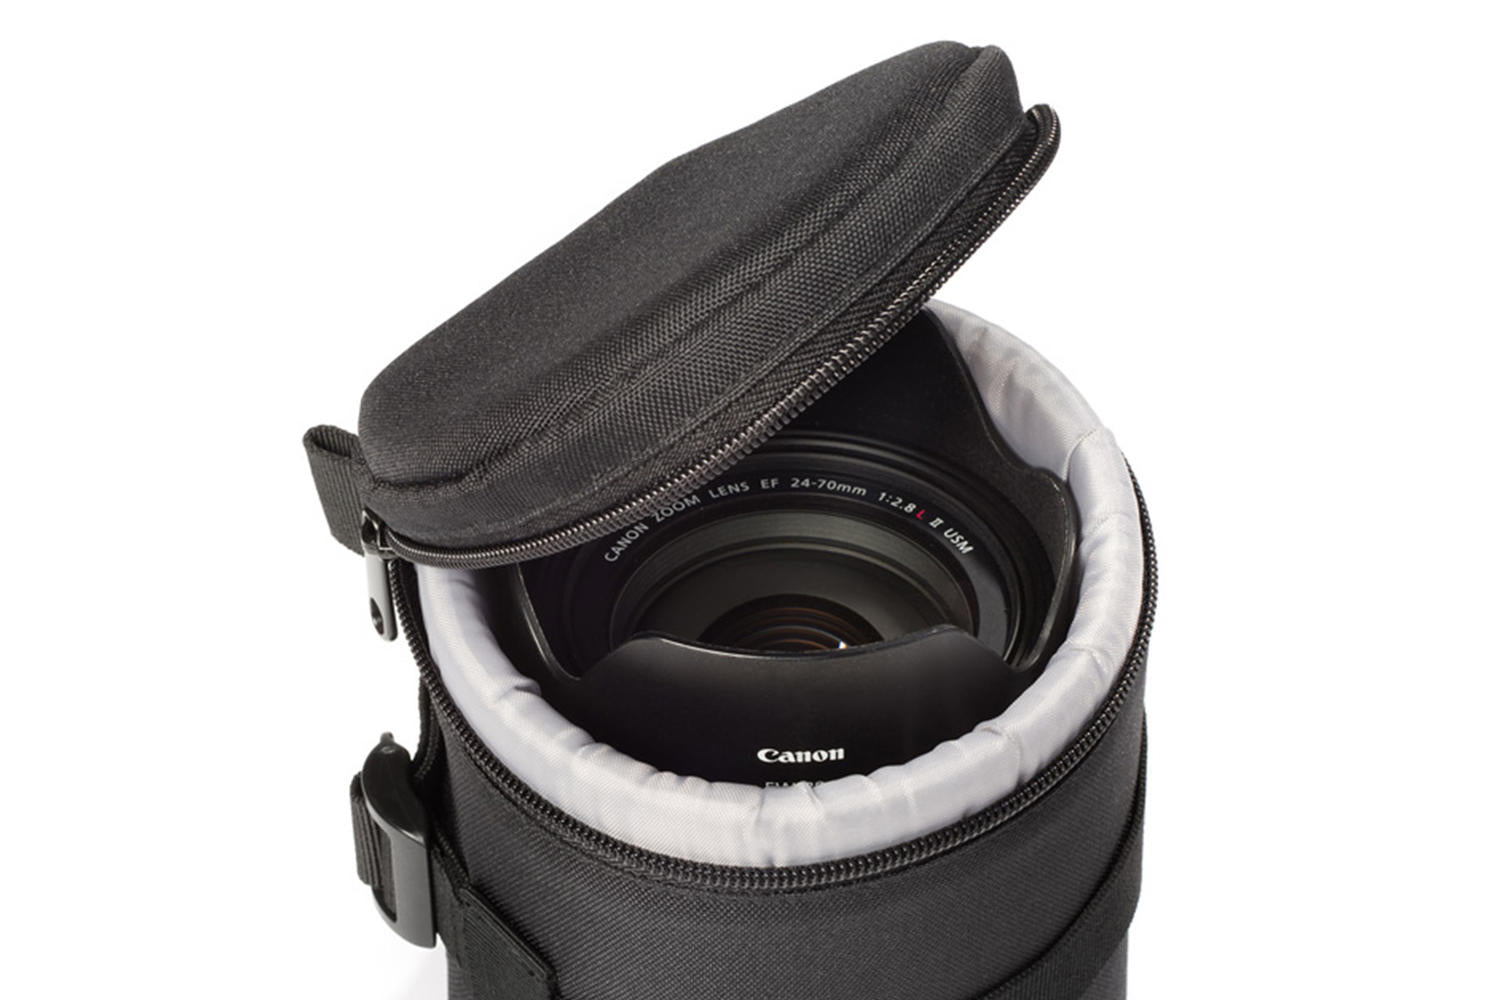 easyCover Lens Bag Size 110x190mm